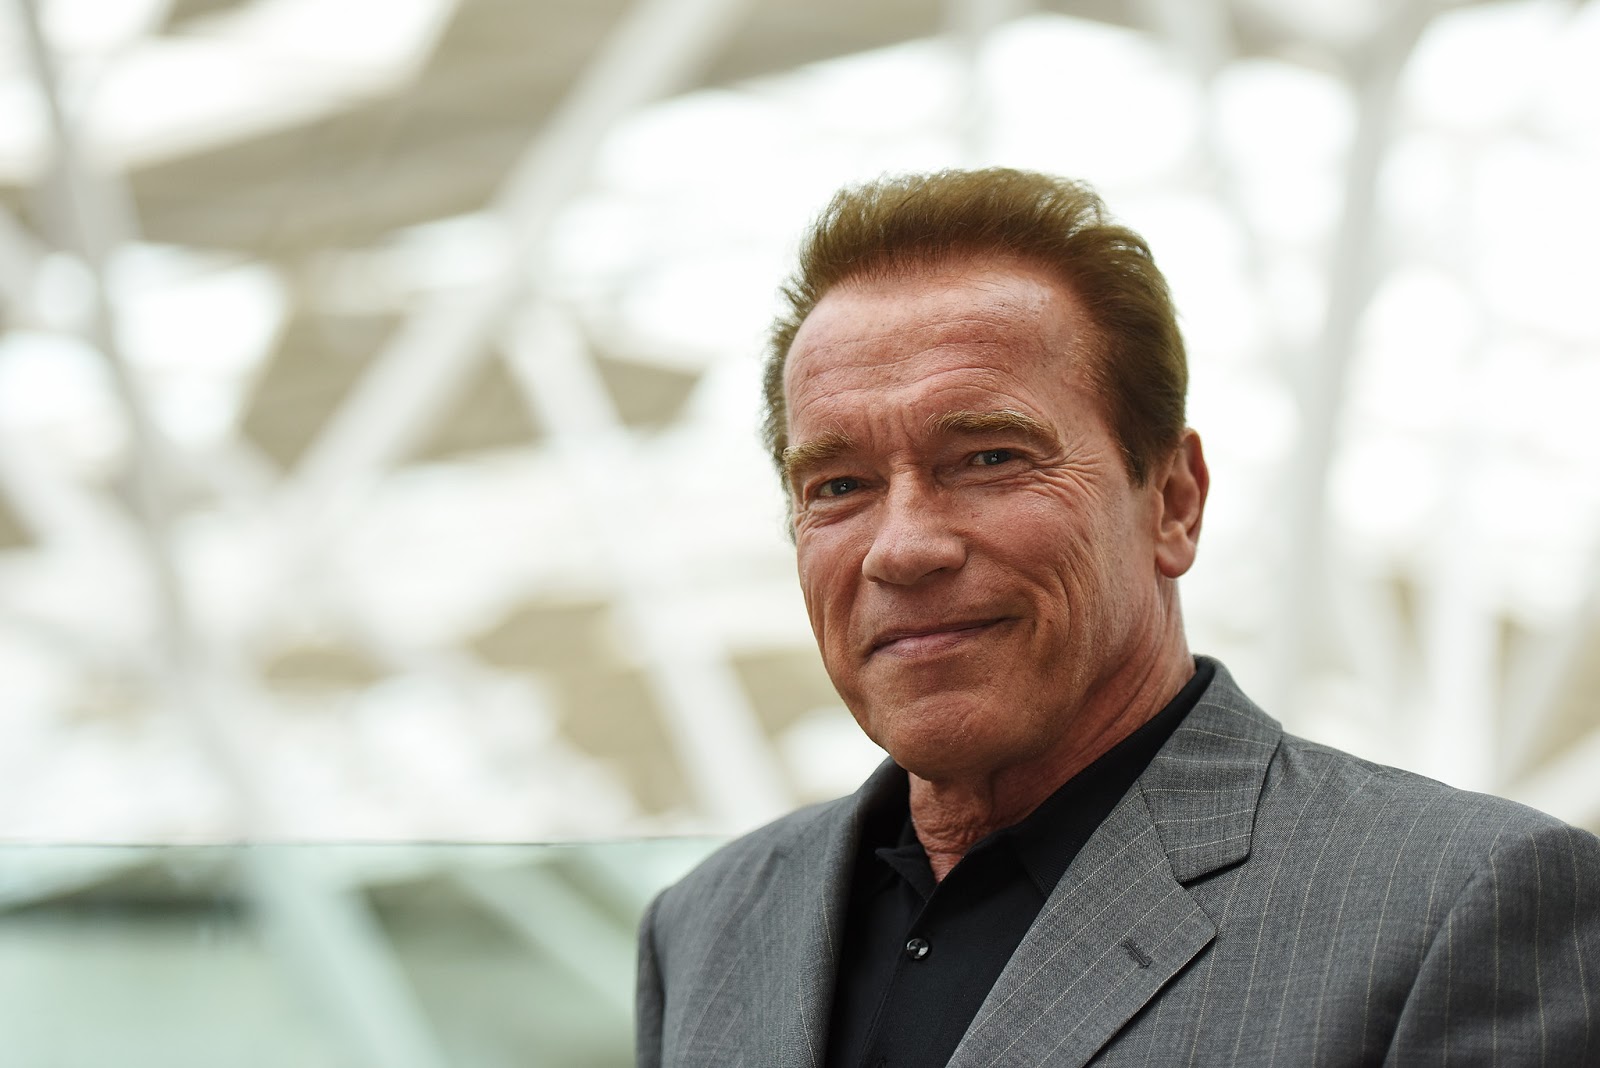 Arnold Schwarzenegger Images Now - Terminator Arnold Schwarzenegger Images Hd - HD Wallpaper 